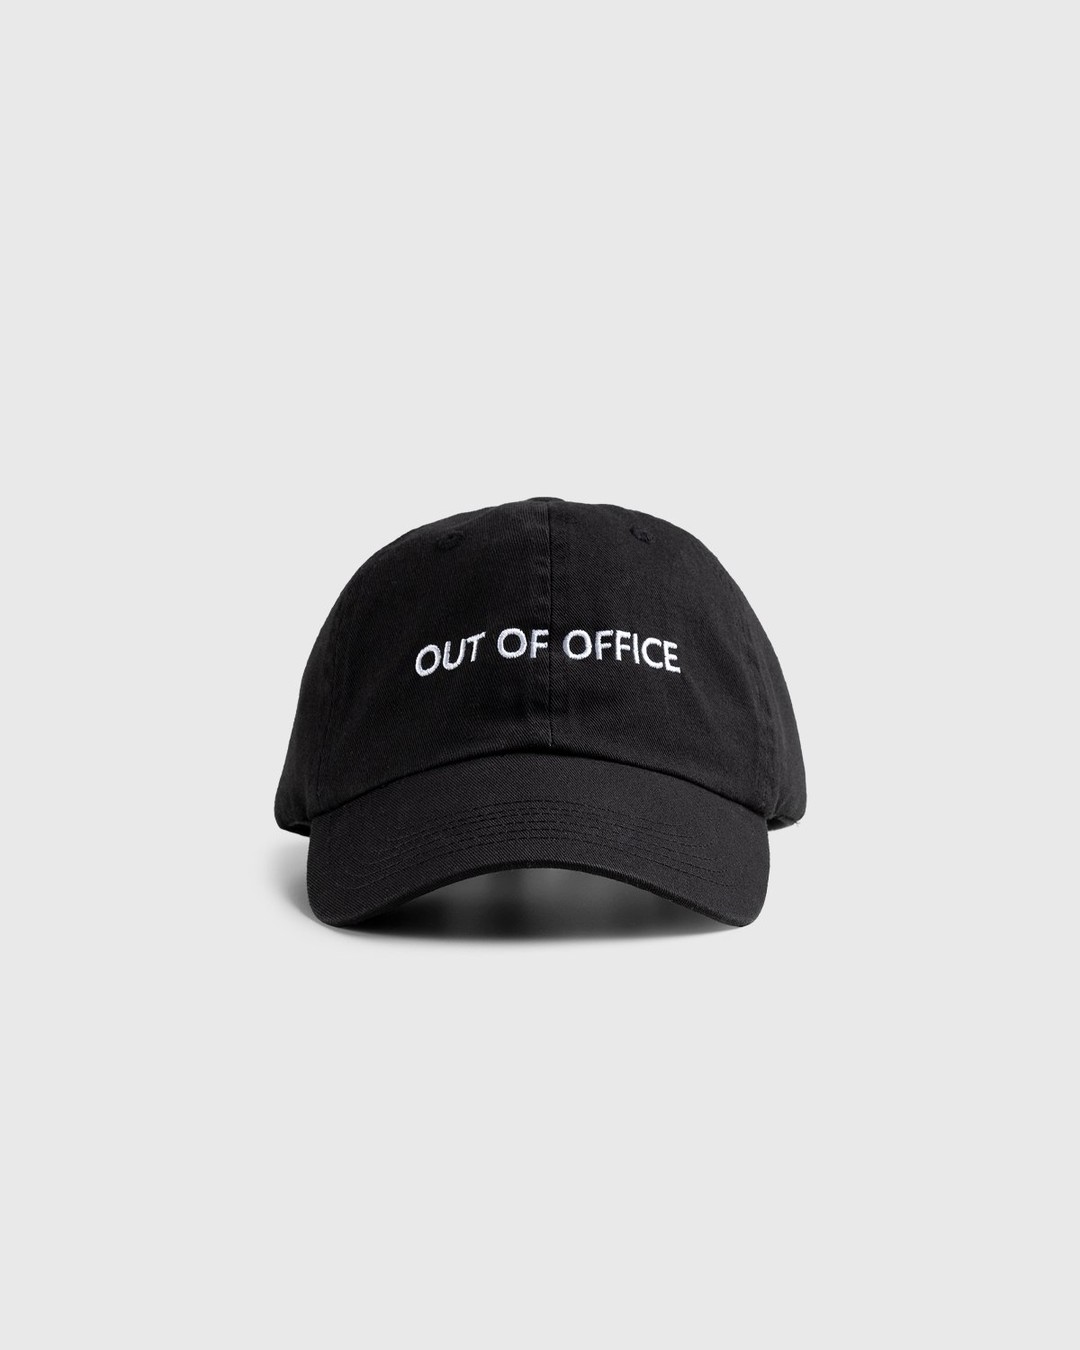 HO HO COCO – Out of Office Cap Black - Caps - Black - Image 2